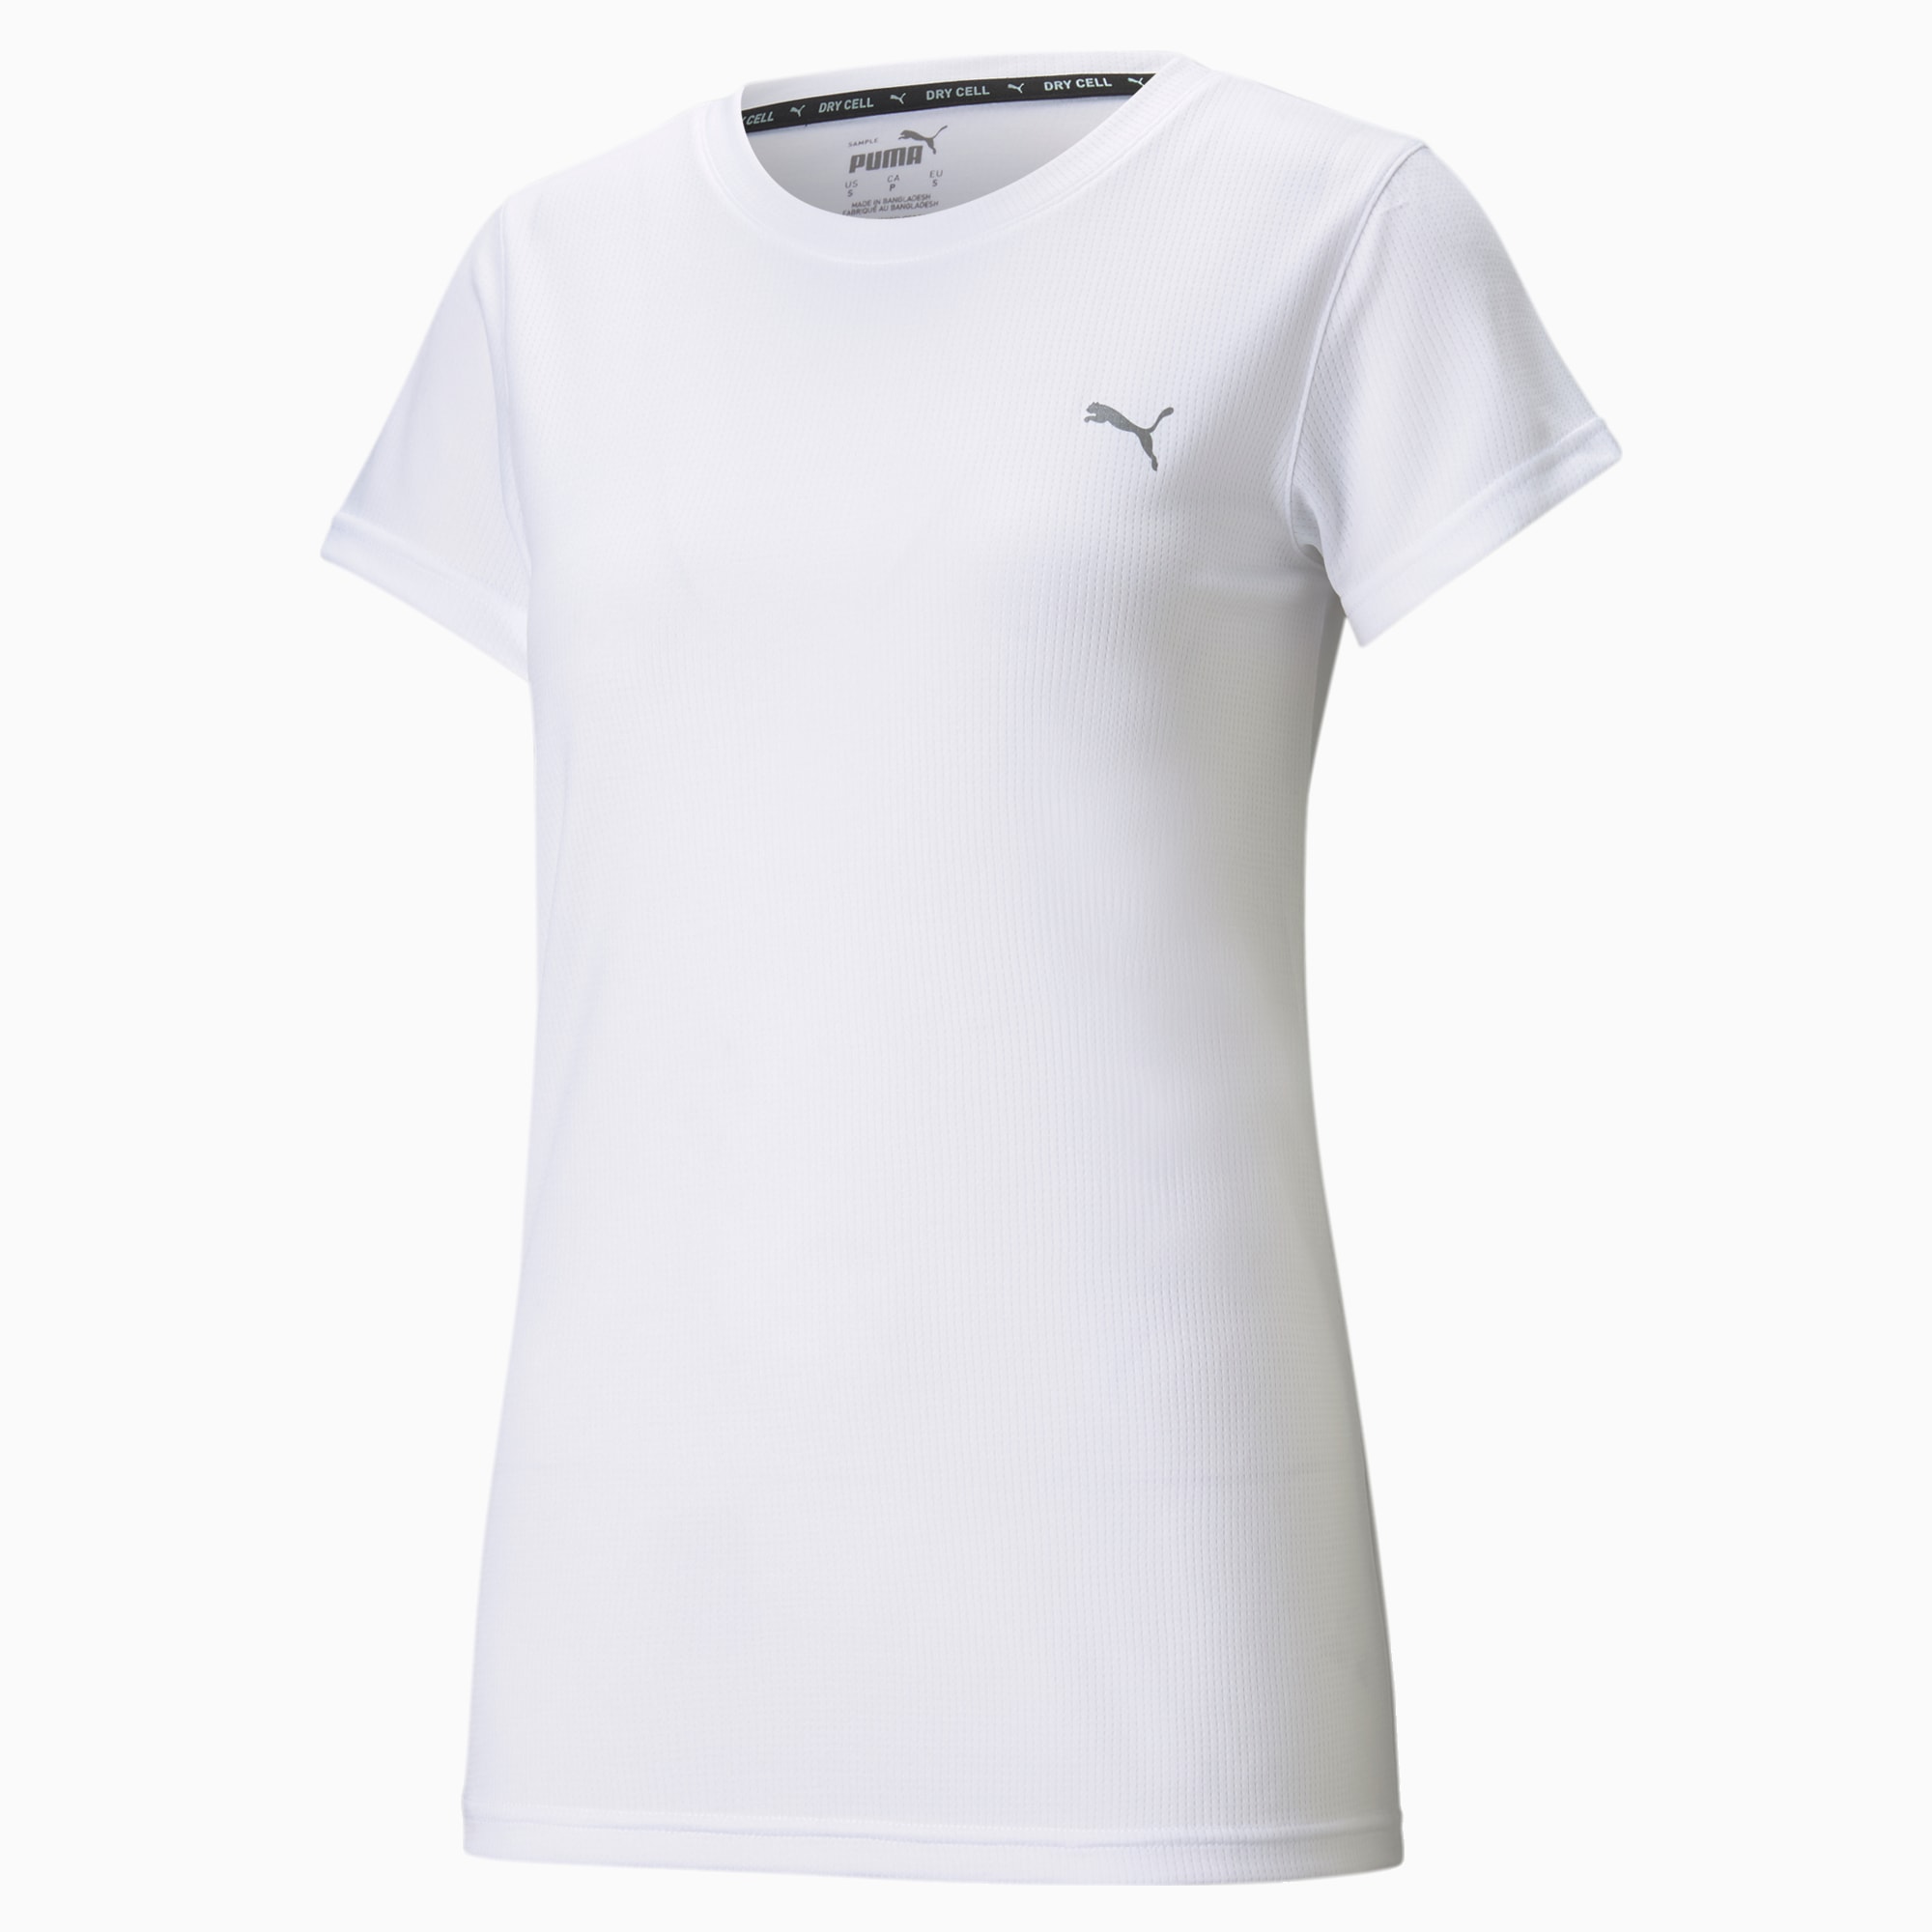 PUMA Performance Women's Training T-Shirt, White, Size XXL, Clothing